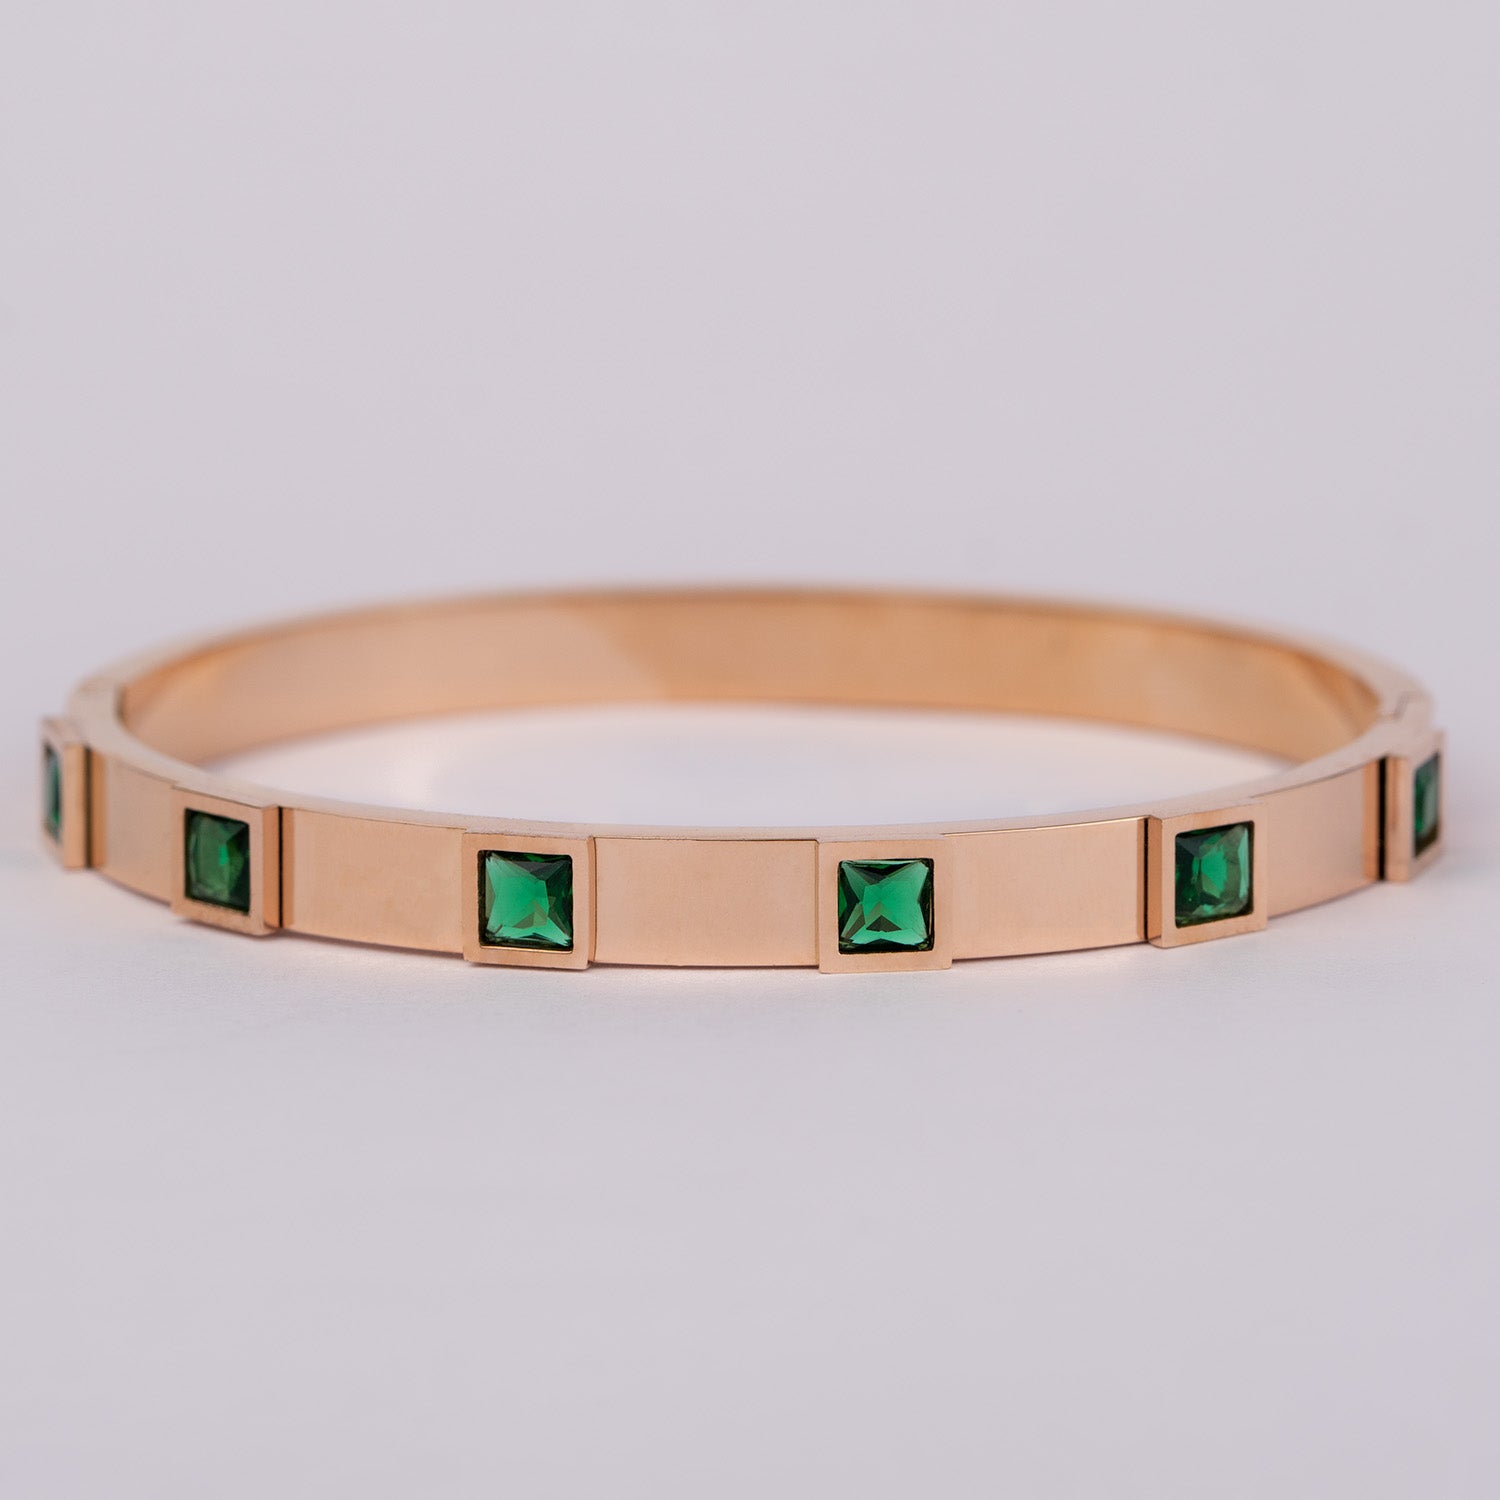 2.80 Ct Green Emerald Cut Lab-Created Bangle Bracelet 14K Yellow Gold  Plated | eBay